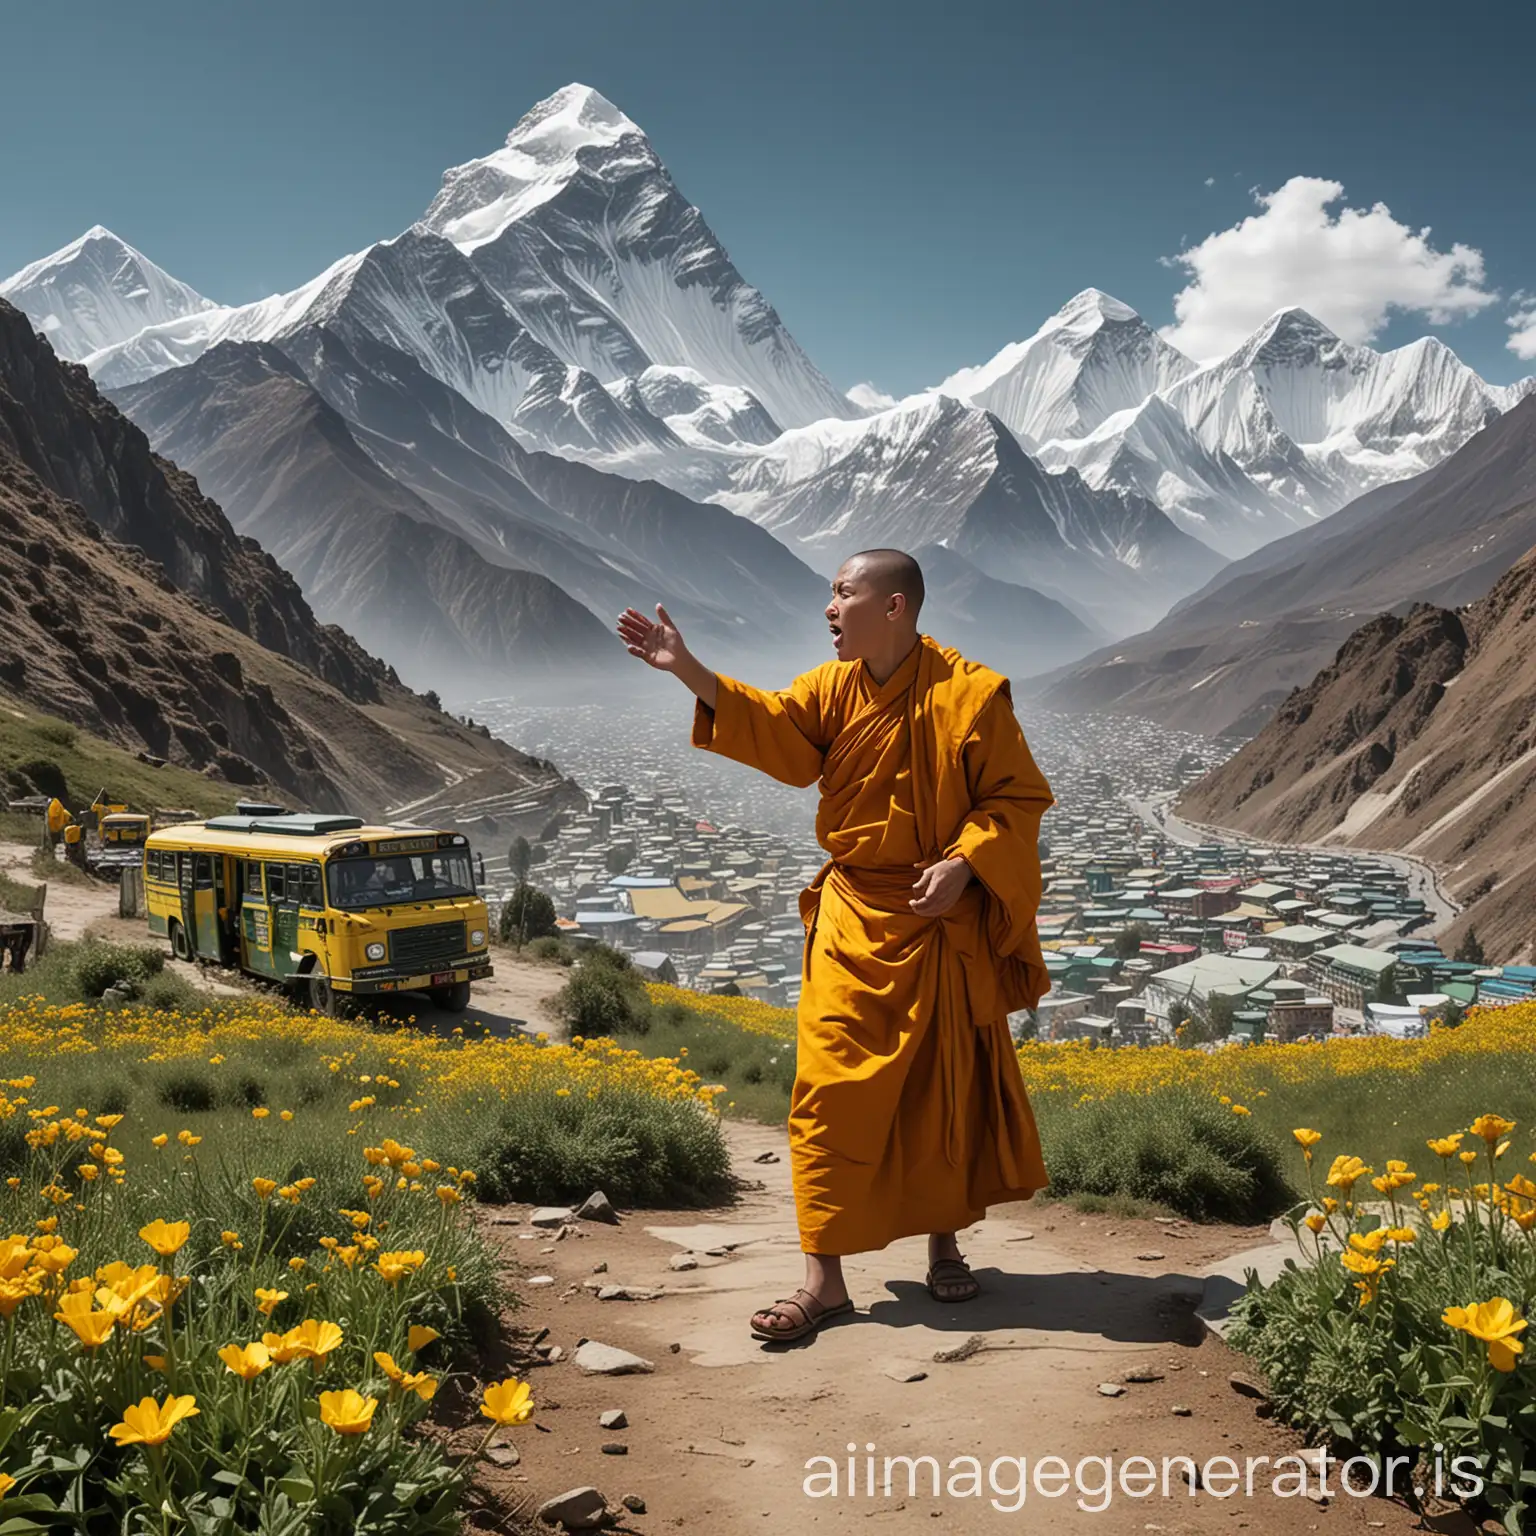 Monk-Boy-Arguing-with-God-of-Wisdom-on-Mount-Everest-Summit